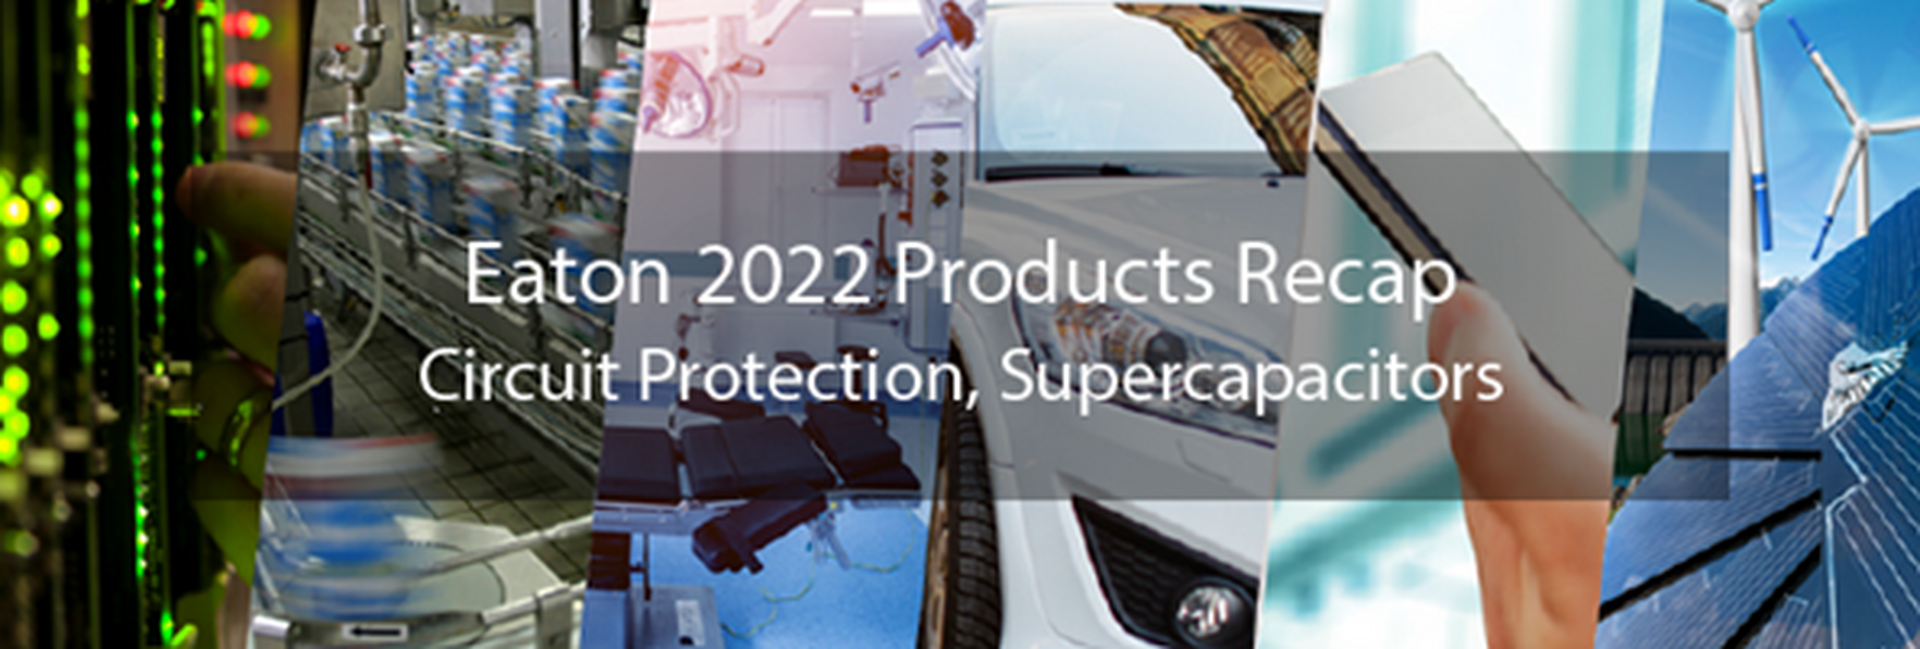 Eaton product recap 2022